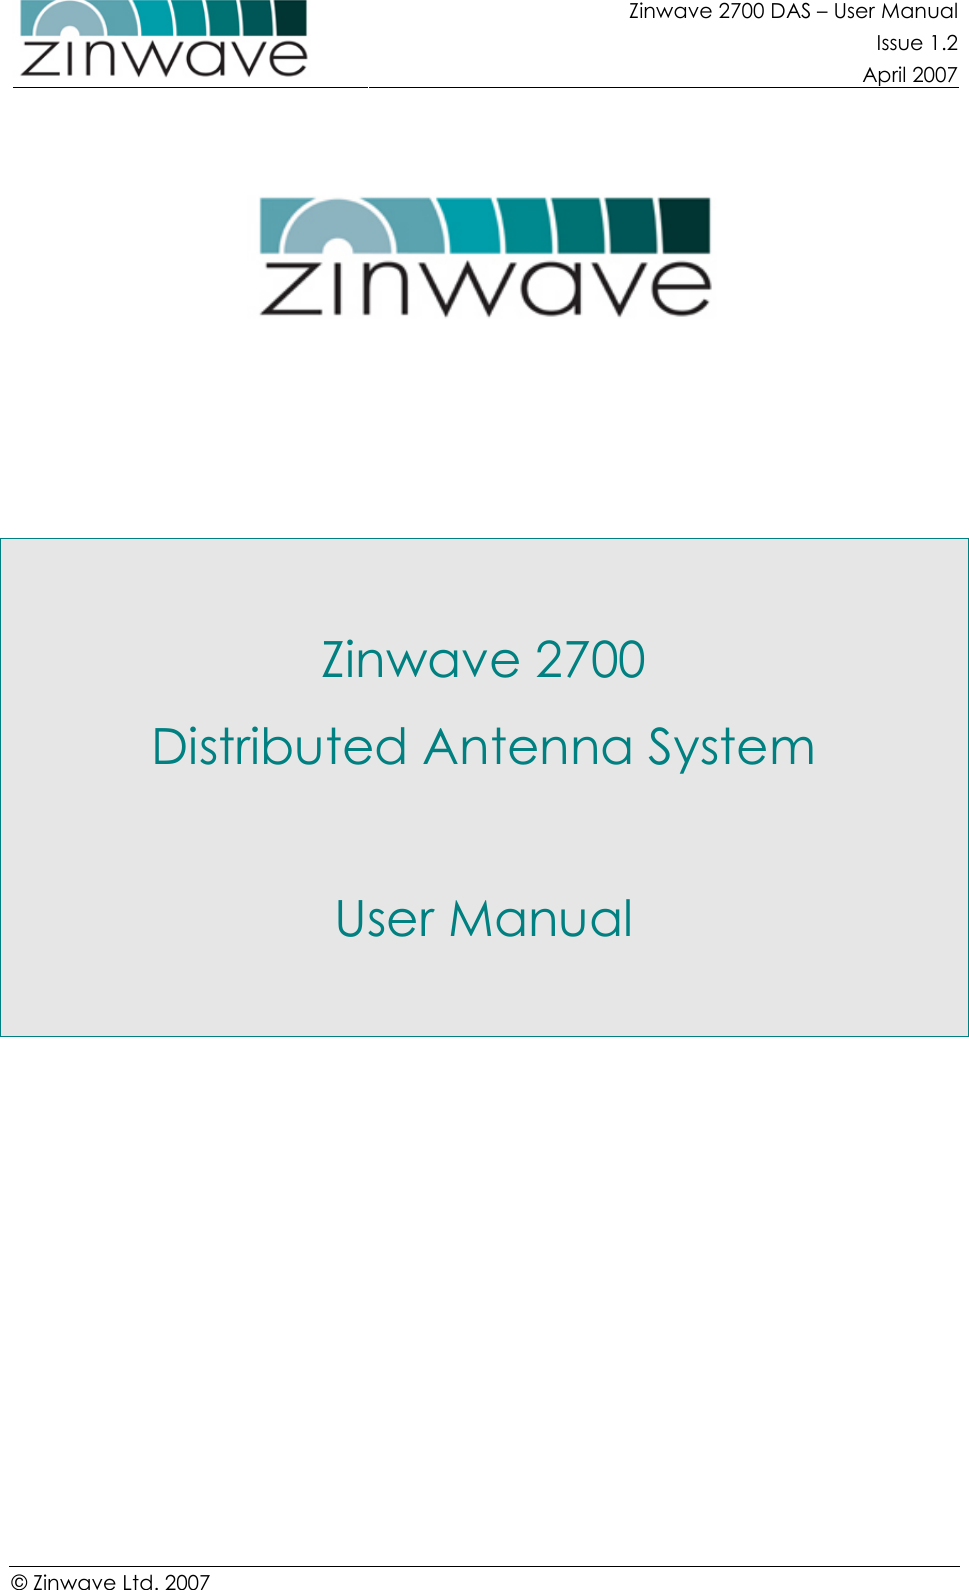 Zinwave 2700 DAS – User Manual Issue 1.2  April 2007  © Zinwave Ltd. 2007               Zinwave 2700 Distributed Antenna System  User Manual      